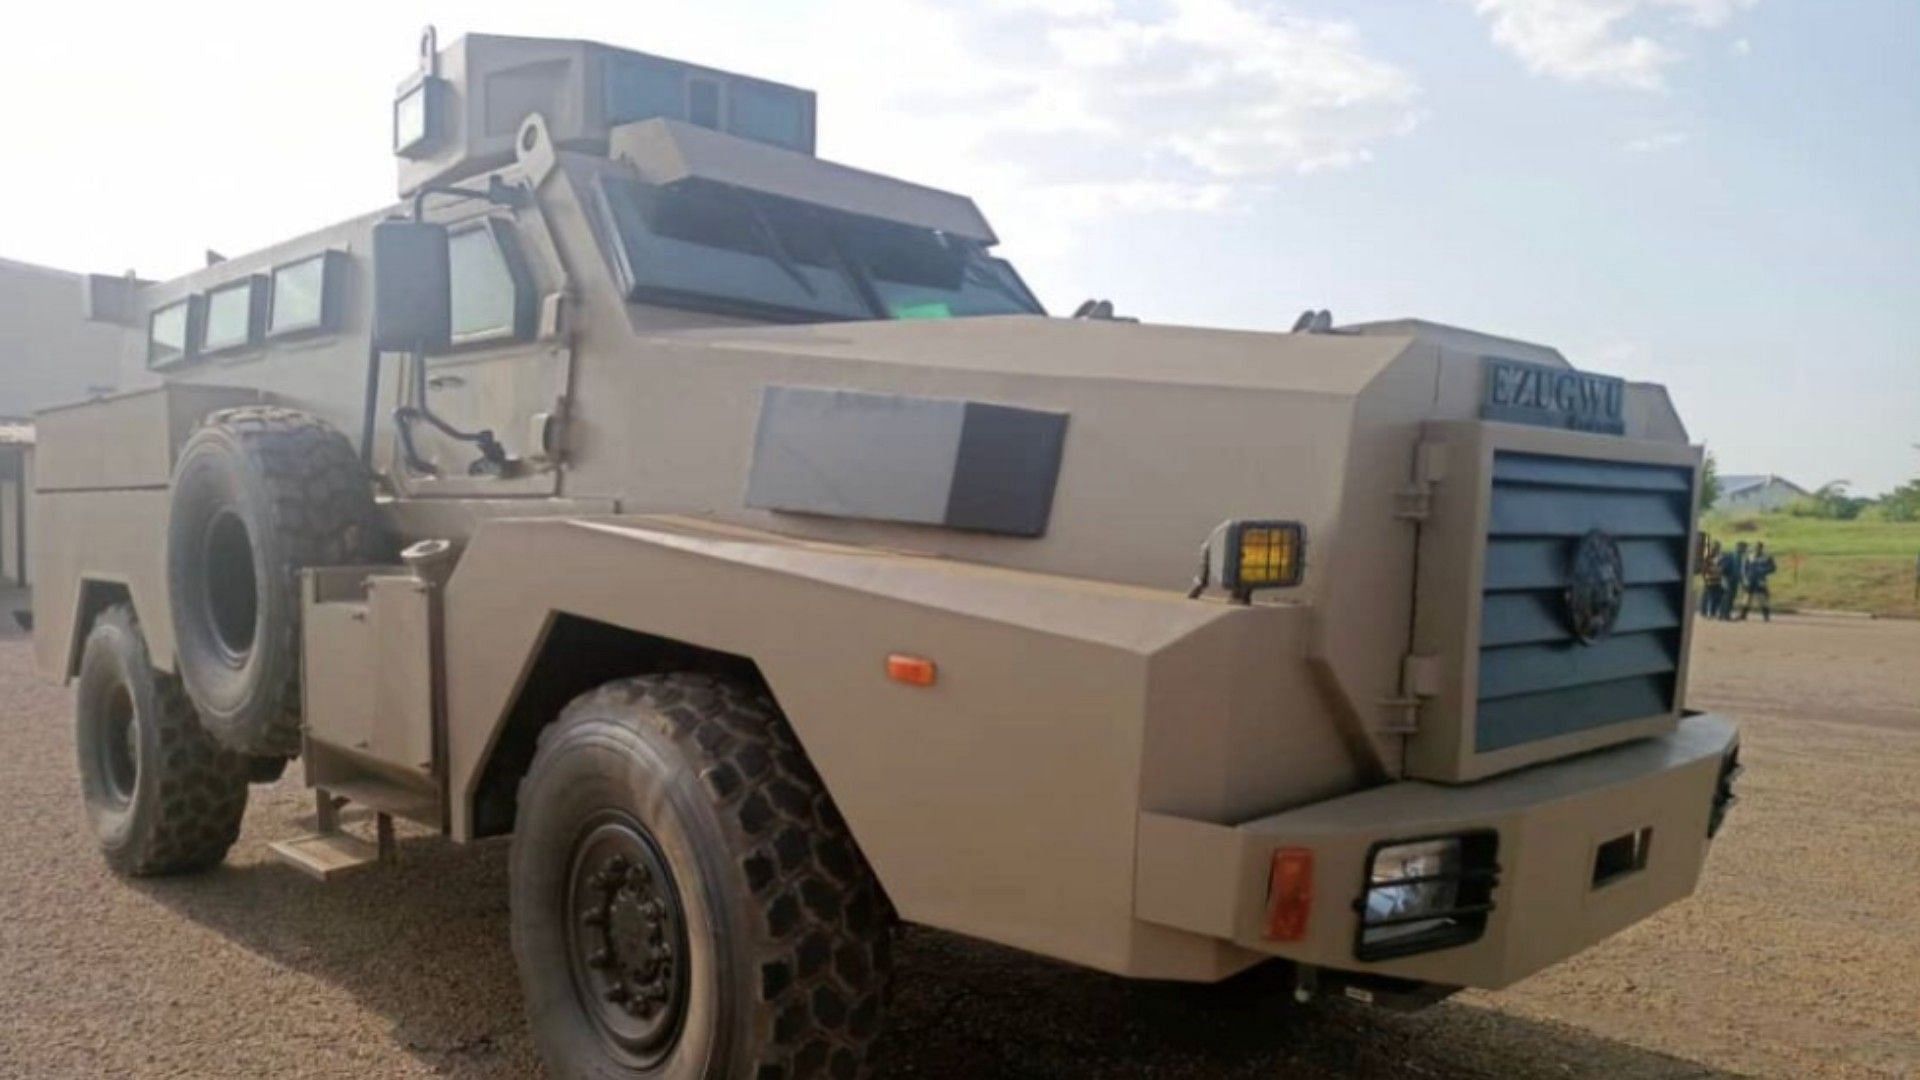 Representational image of Mine Resistant Ambush Protected (MRAP) Vehicle (Image via UNCLE DEJI)